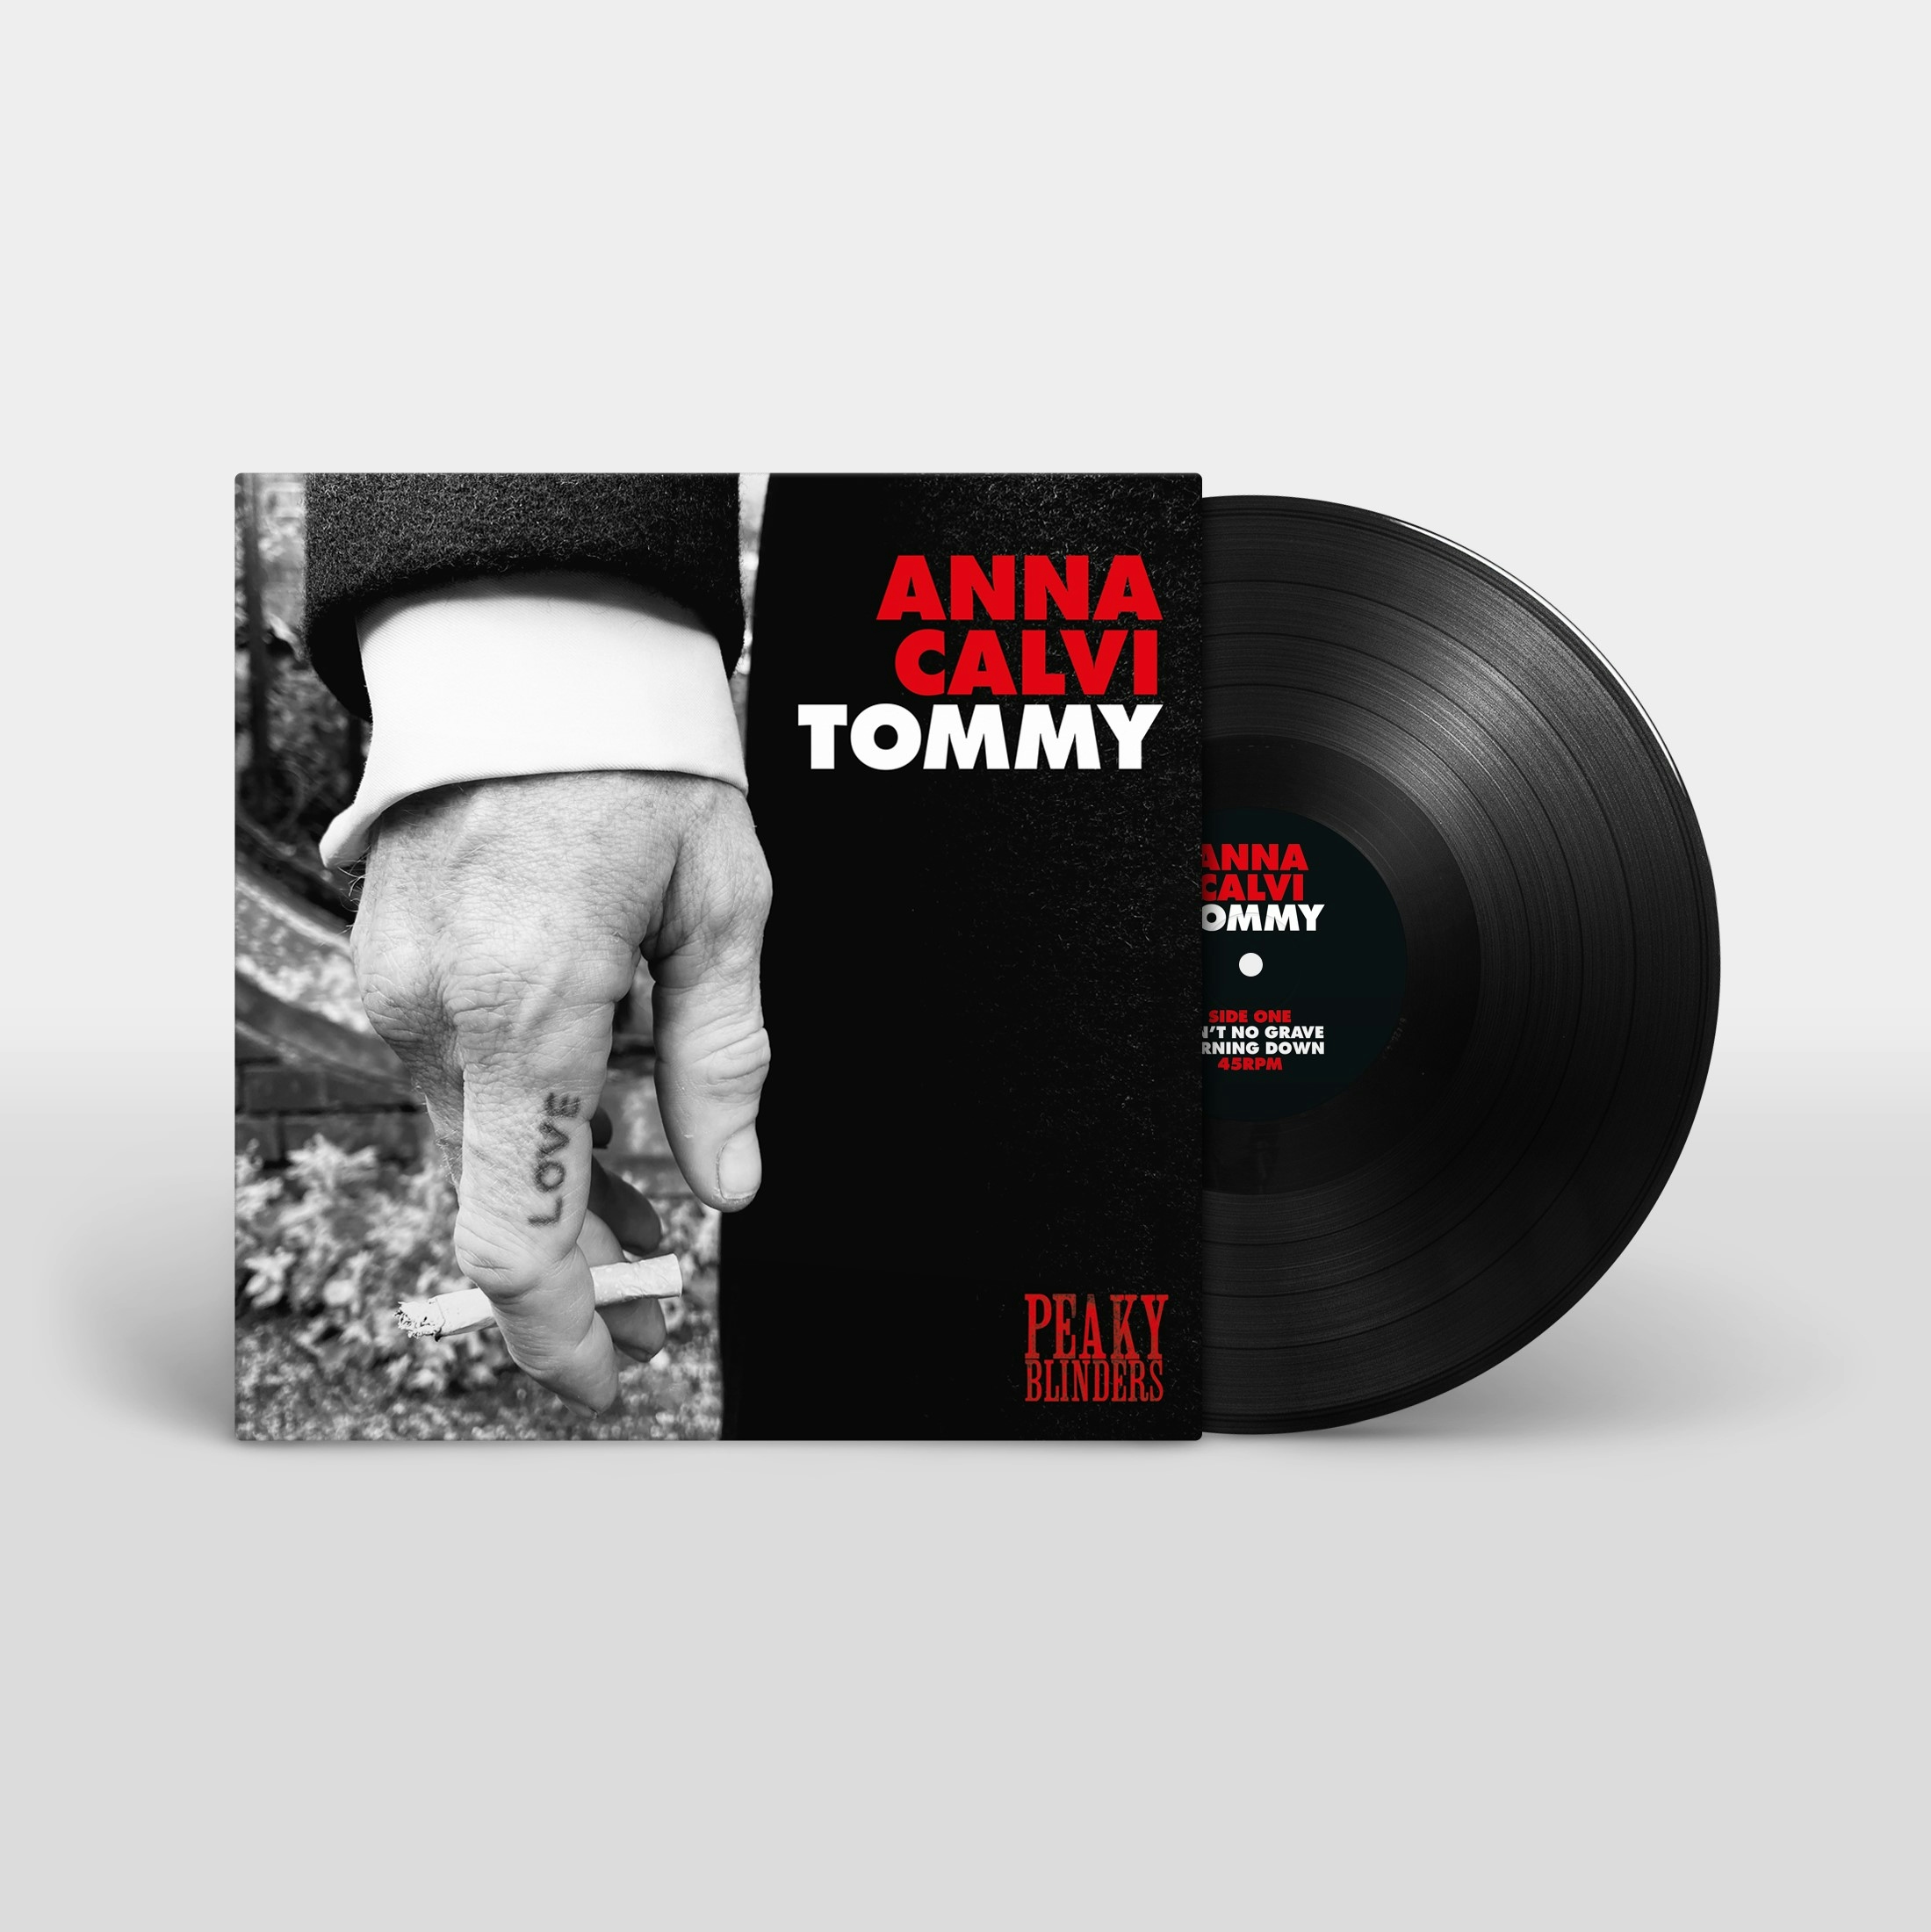 Album artwork for Tommy by Anna Calvi